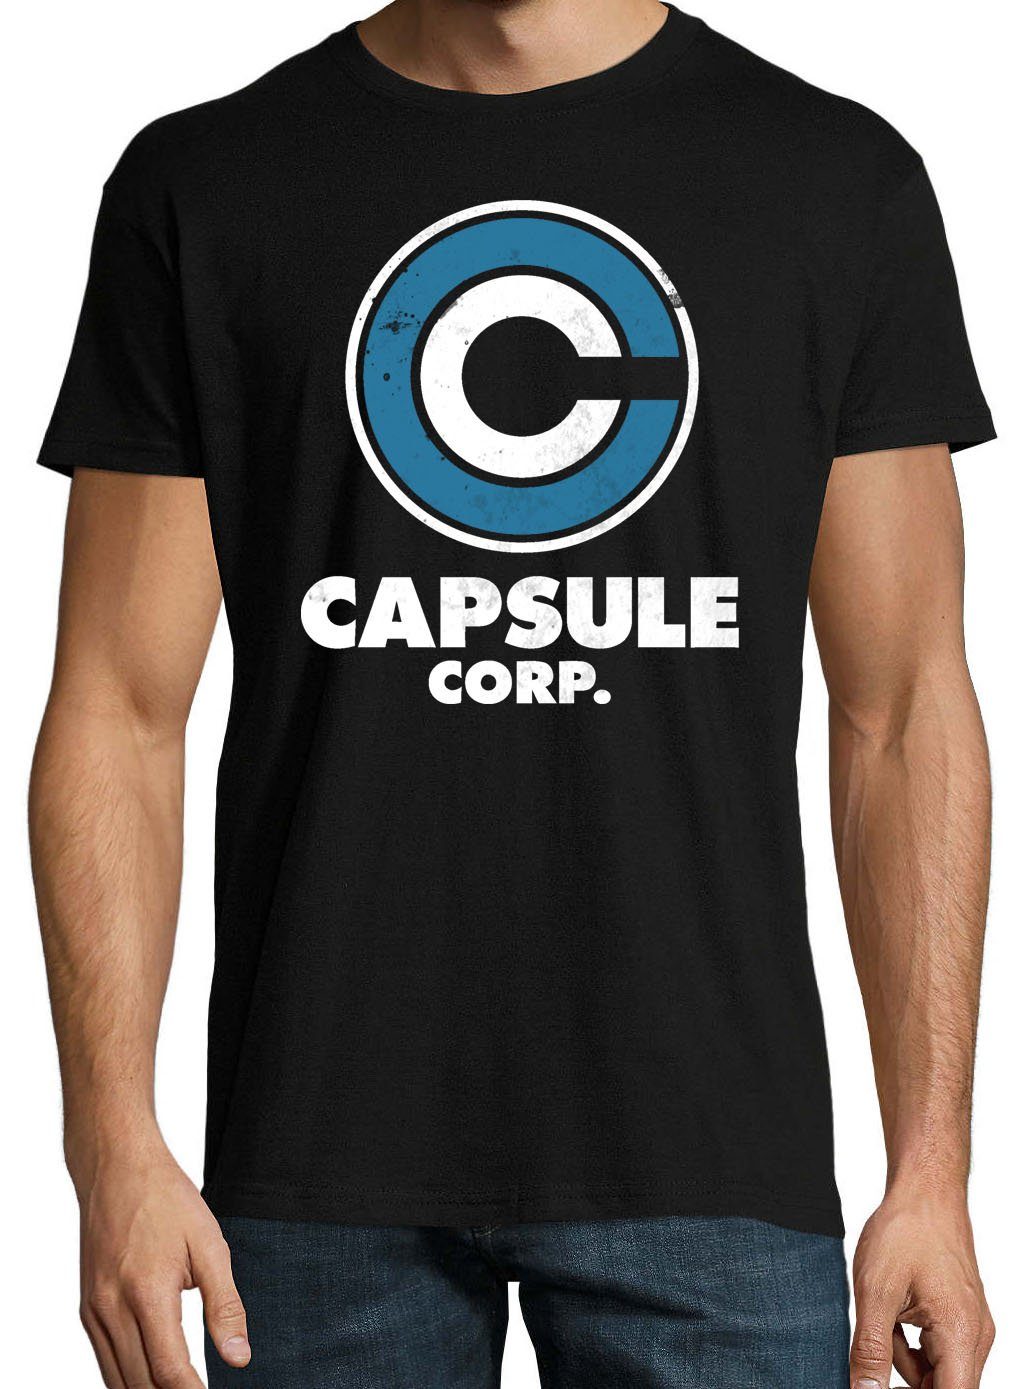 Corp Schwarz Capsule Frontprint Shirt Herren mit T-Shirt Designz trendigem Youth